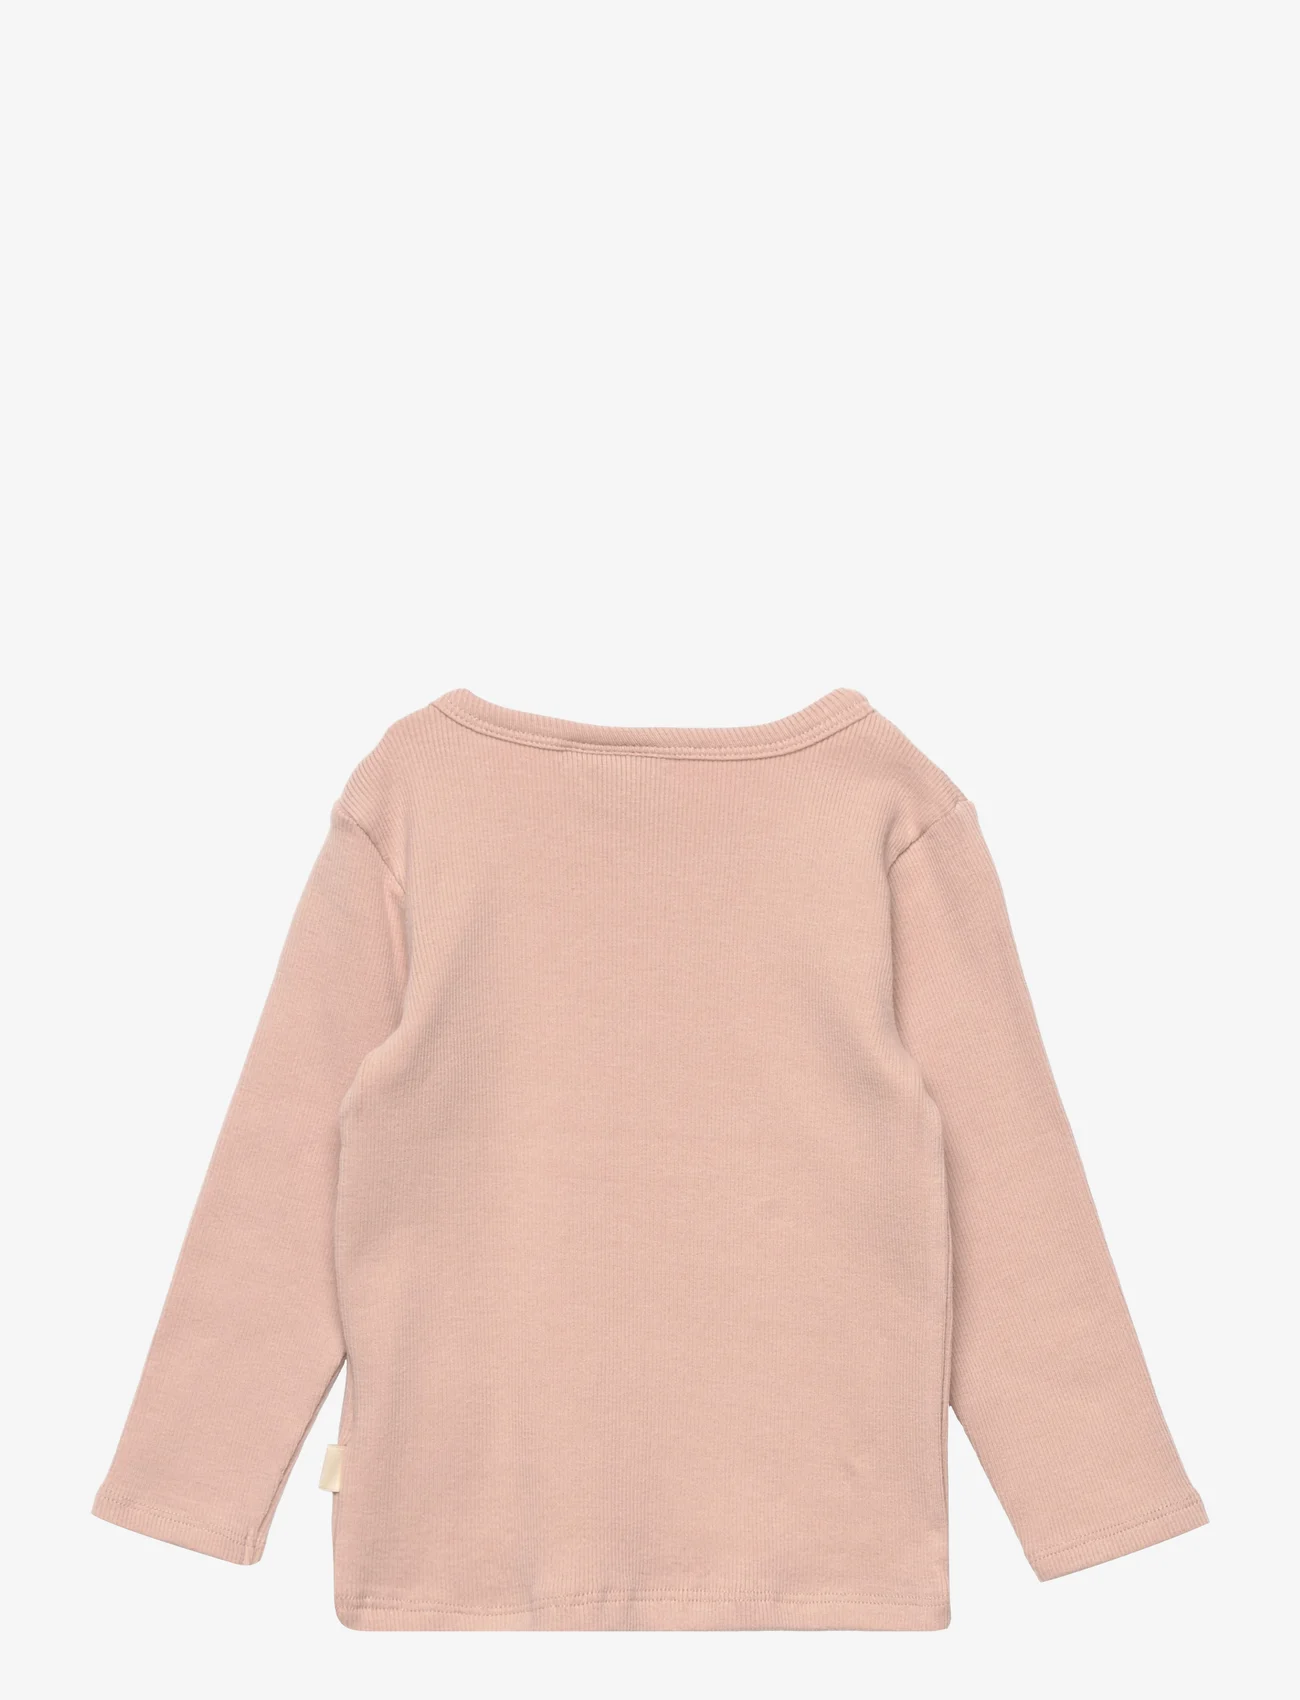 Sofie Schnoor Baby and Kids - T-shirt long-sleeve - dlugi-rekaw - light rose - 1